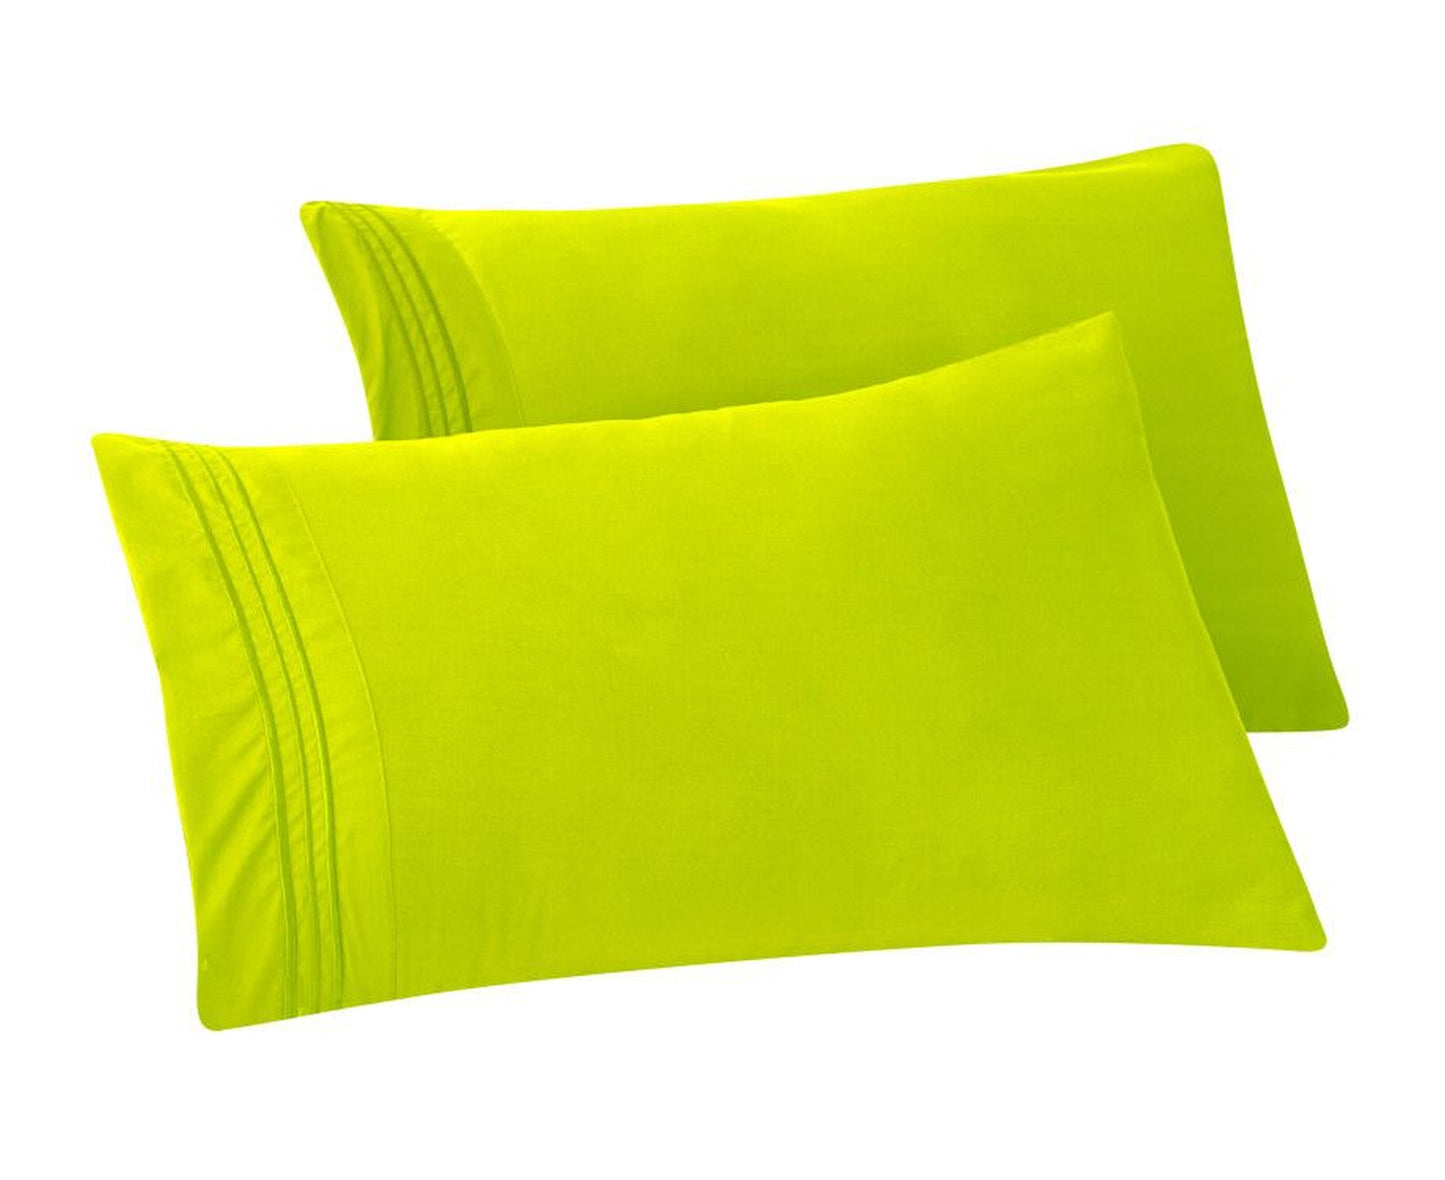 Elegant Comfort Set of 2 Pillowcases- 3 Line Embroidery